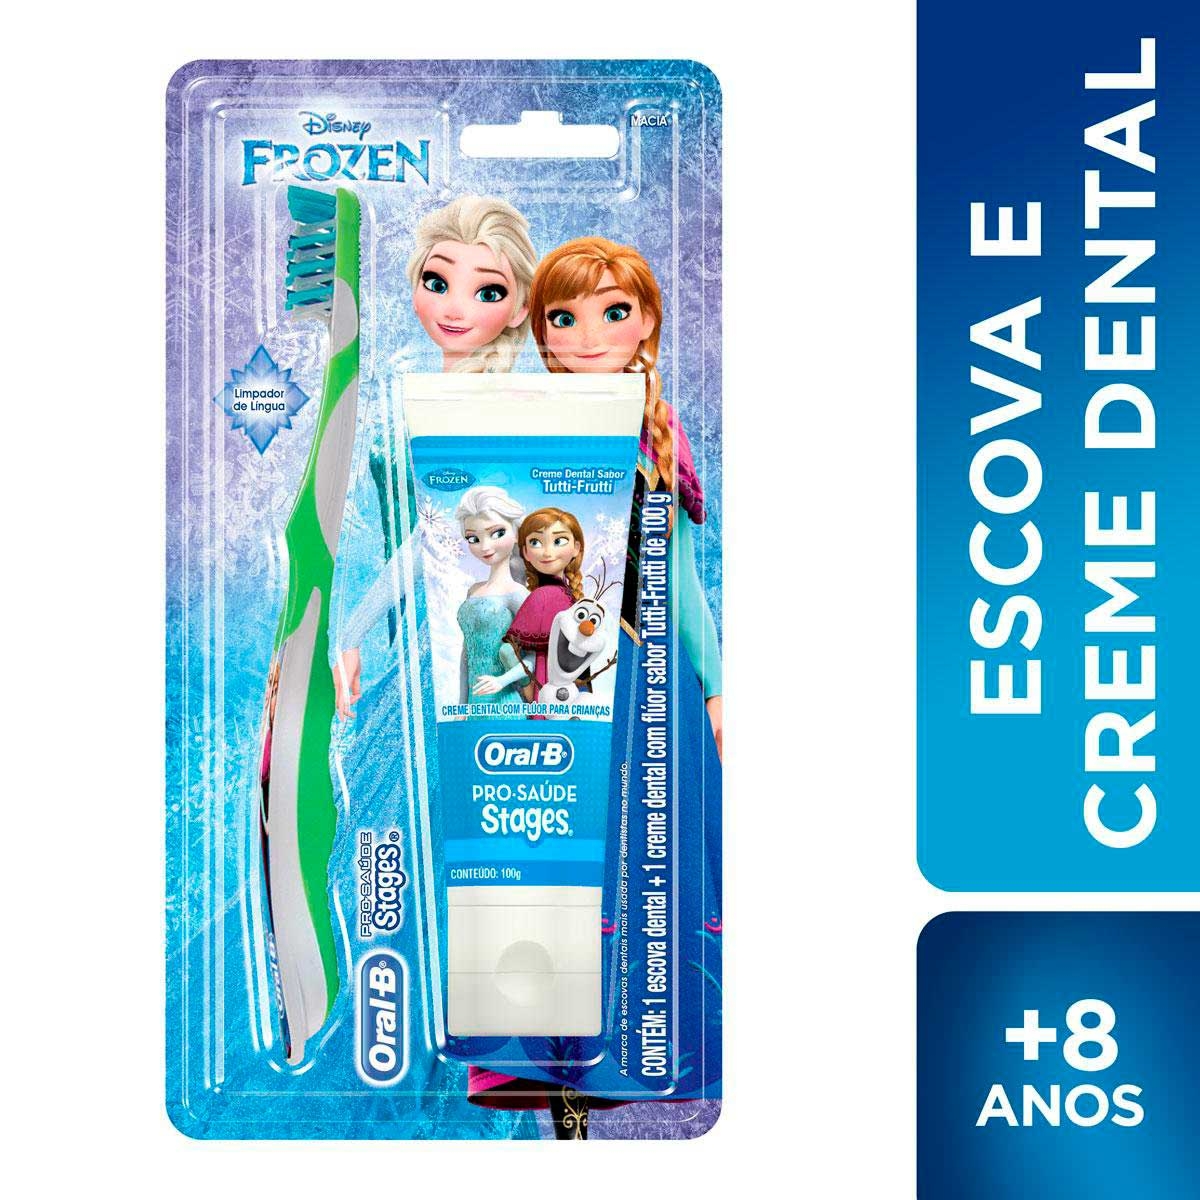 Kit Escova de Dente + Creme Dental Oral-B Stages Frozen com 100g